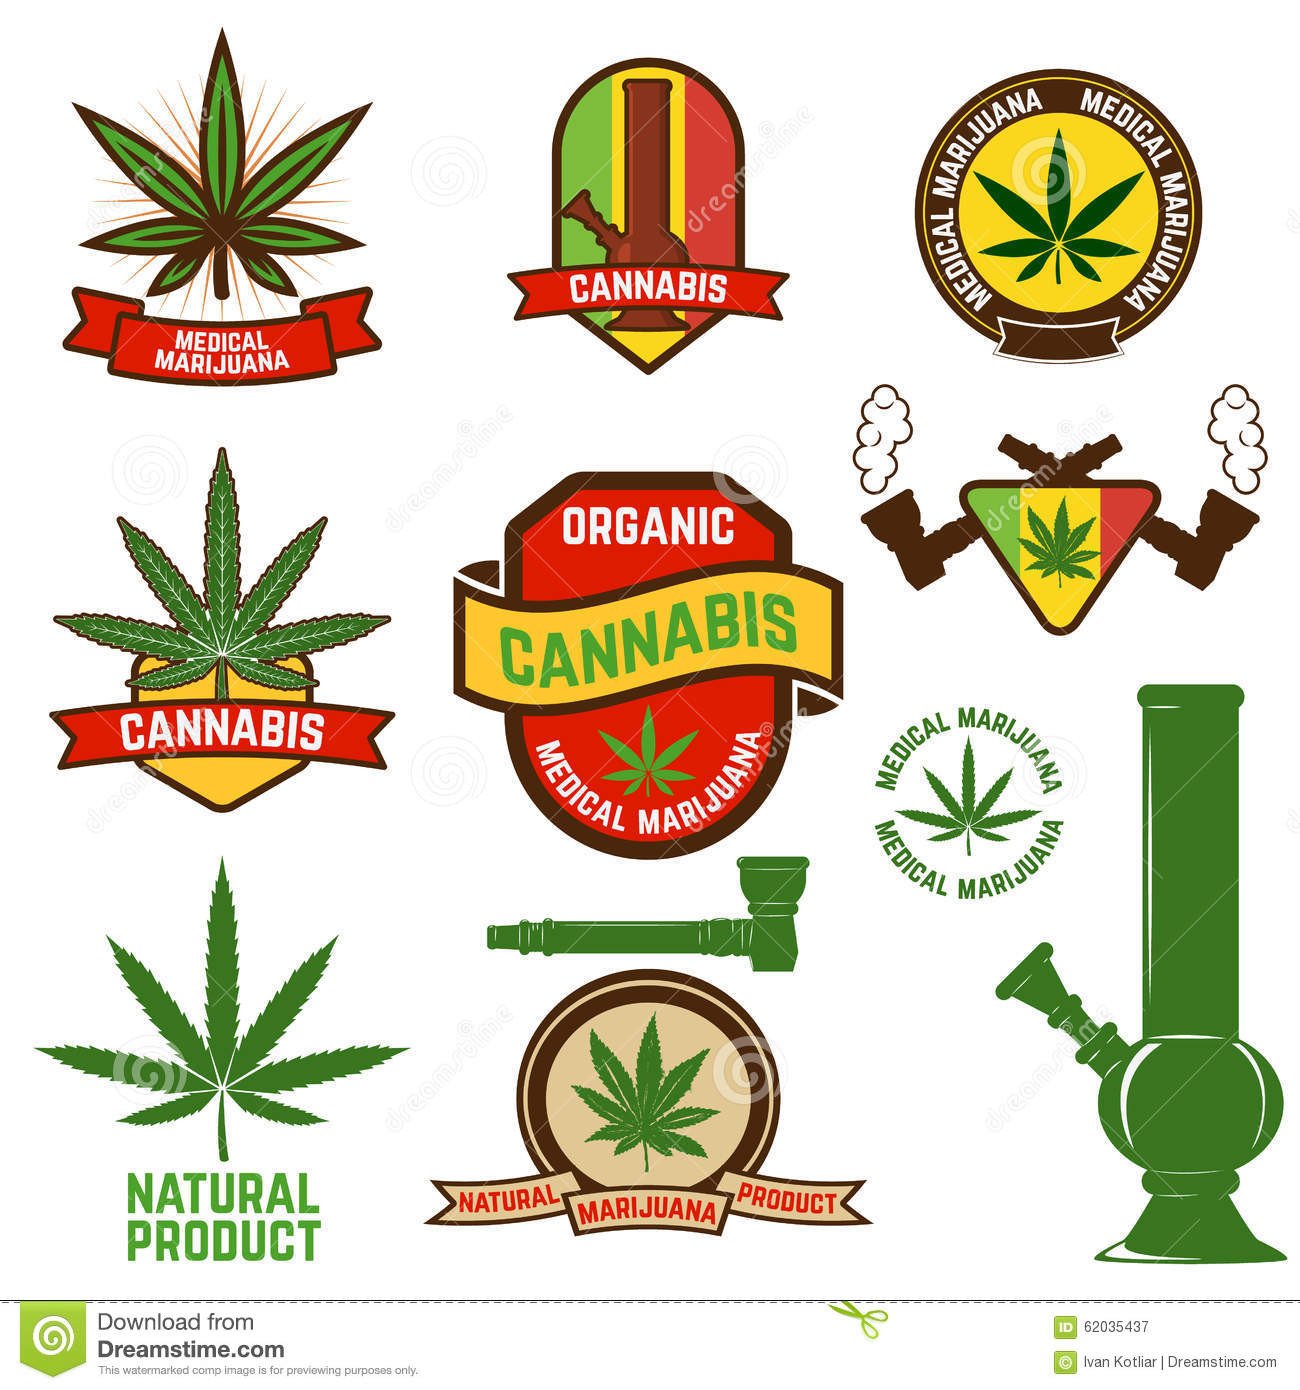 Cannabis Stock Vector Image